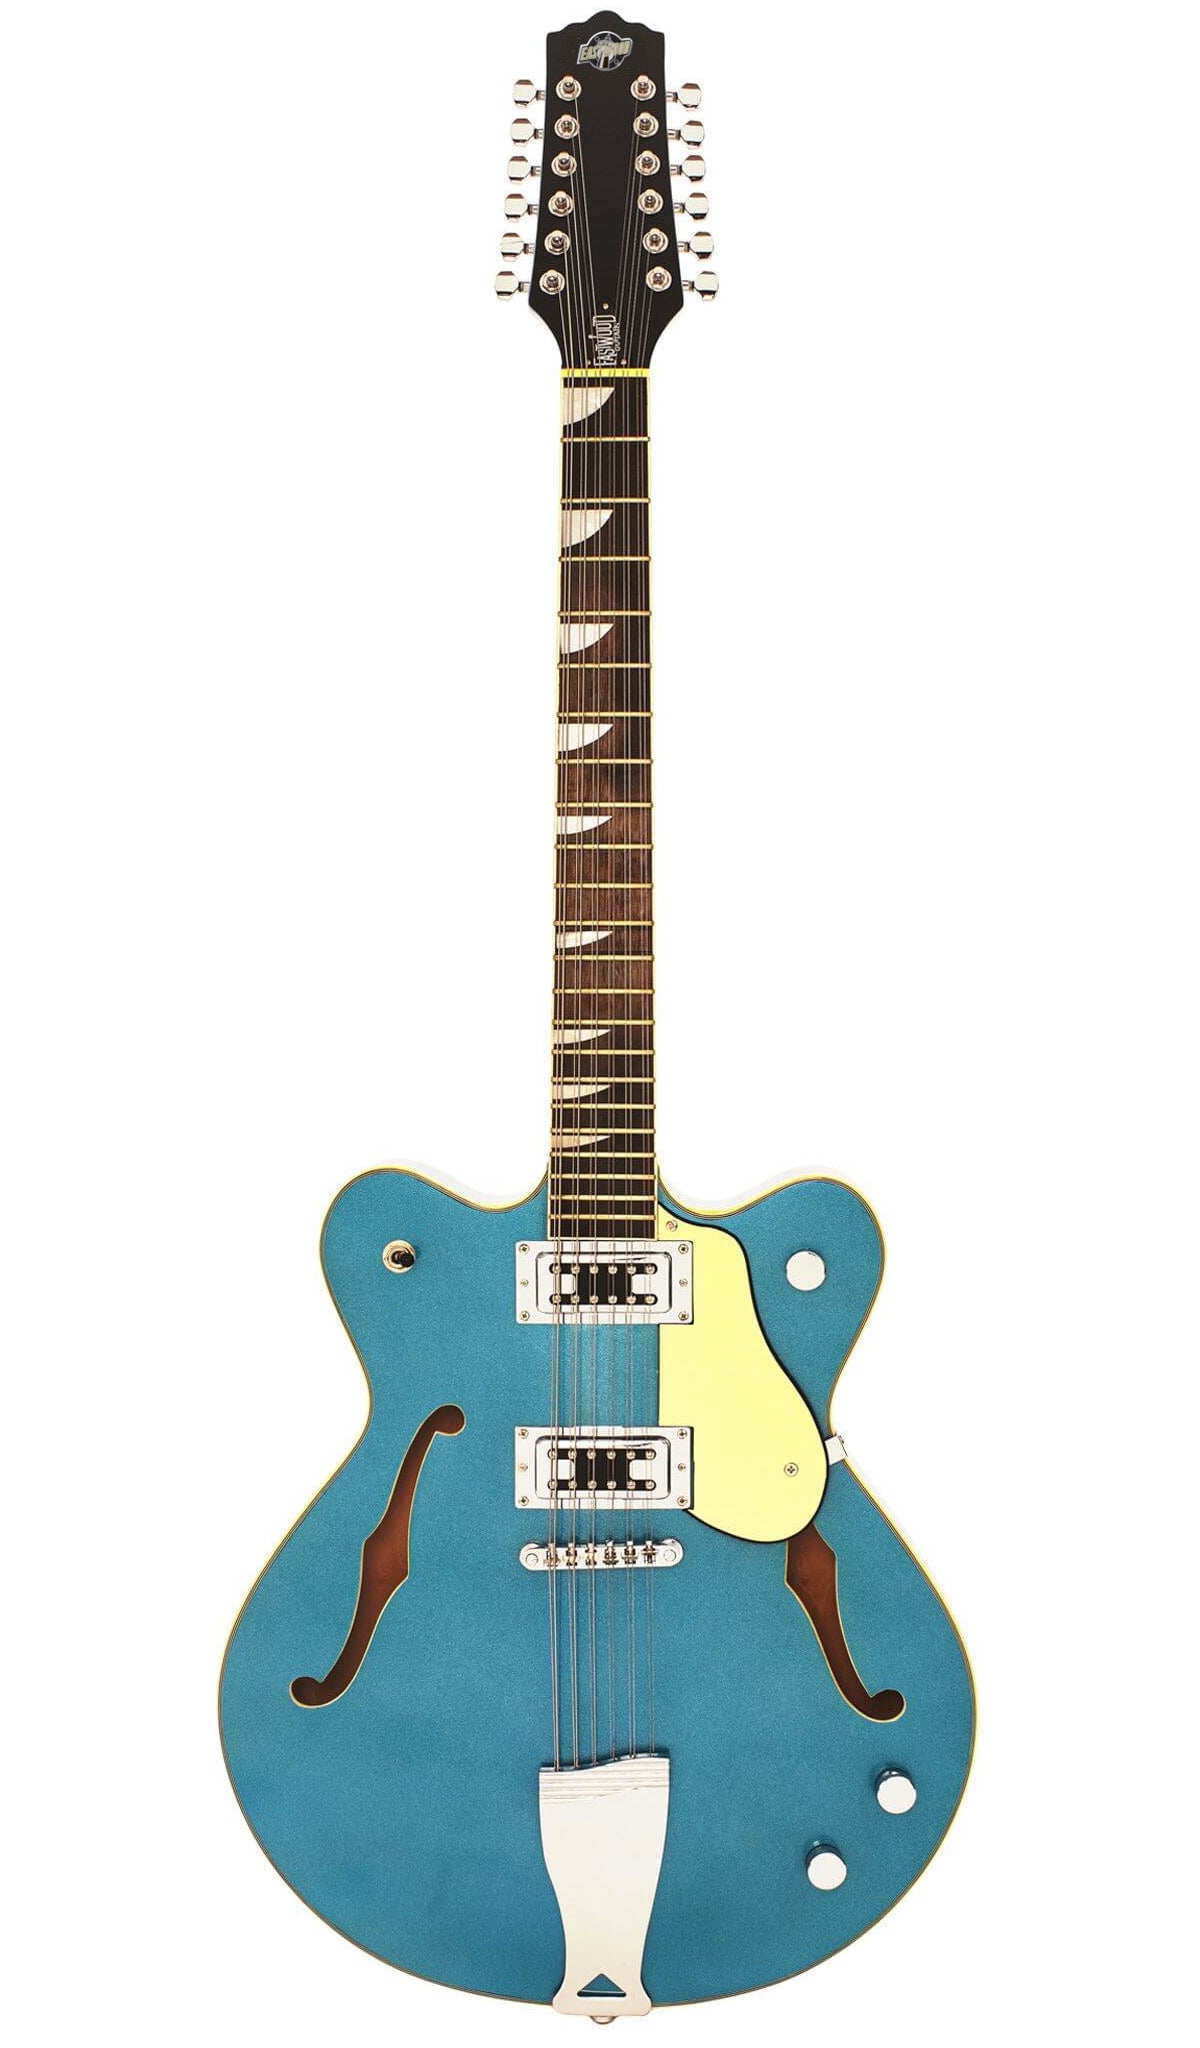 Eastwood Guitars Classic 12 Metallic Blue #color_metallic-blue